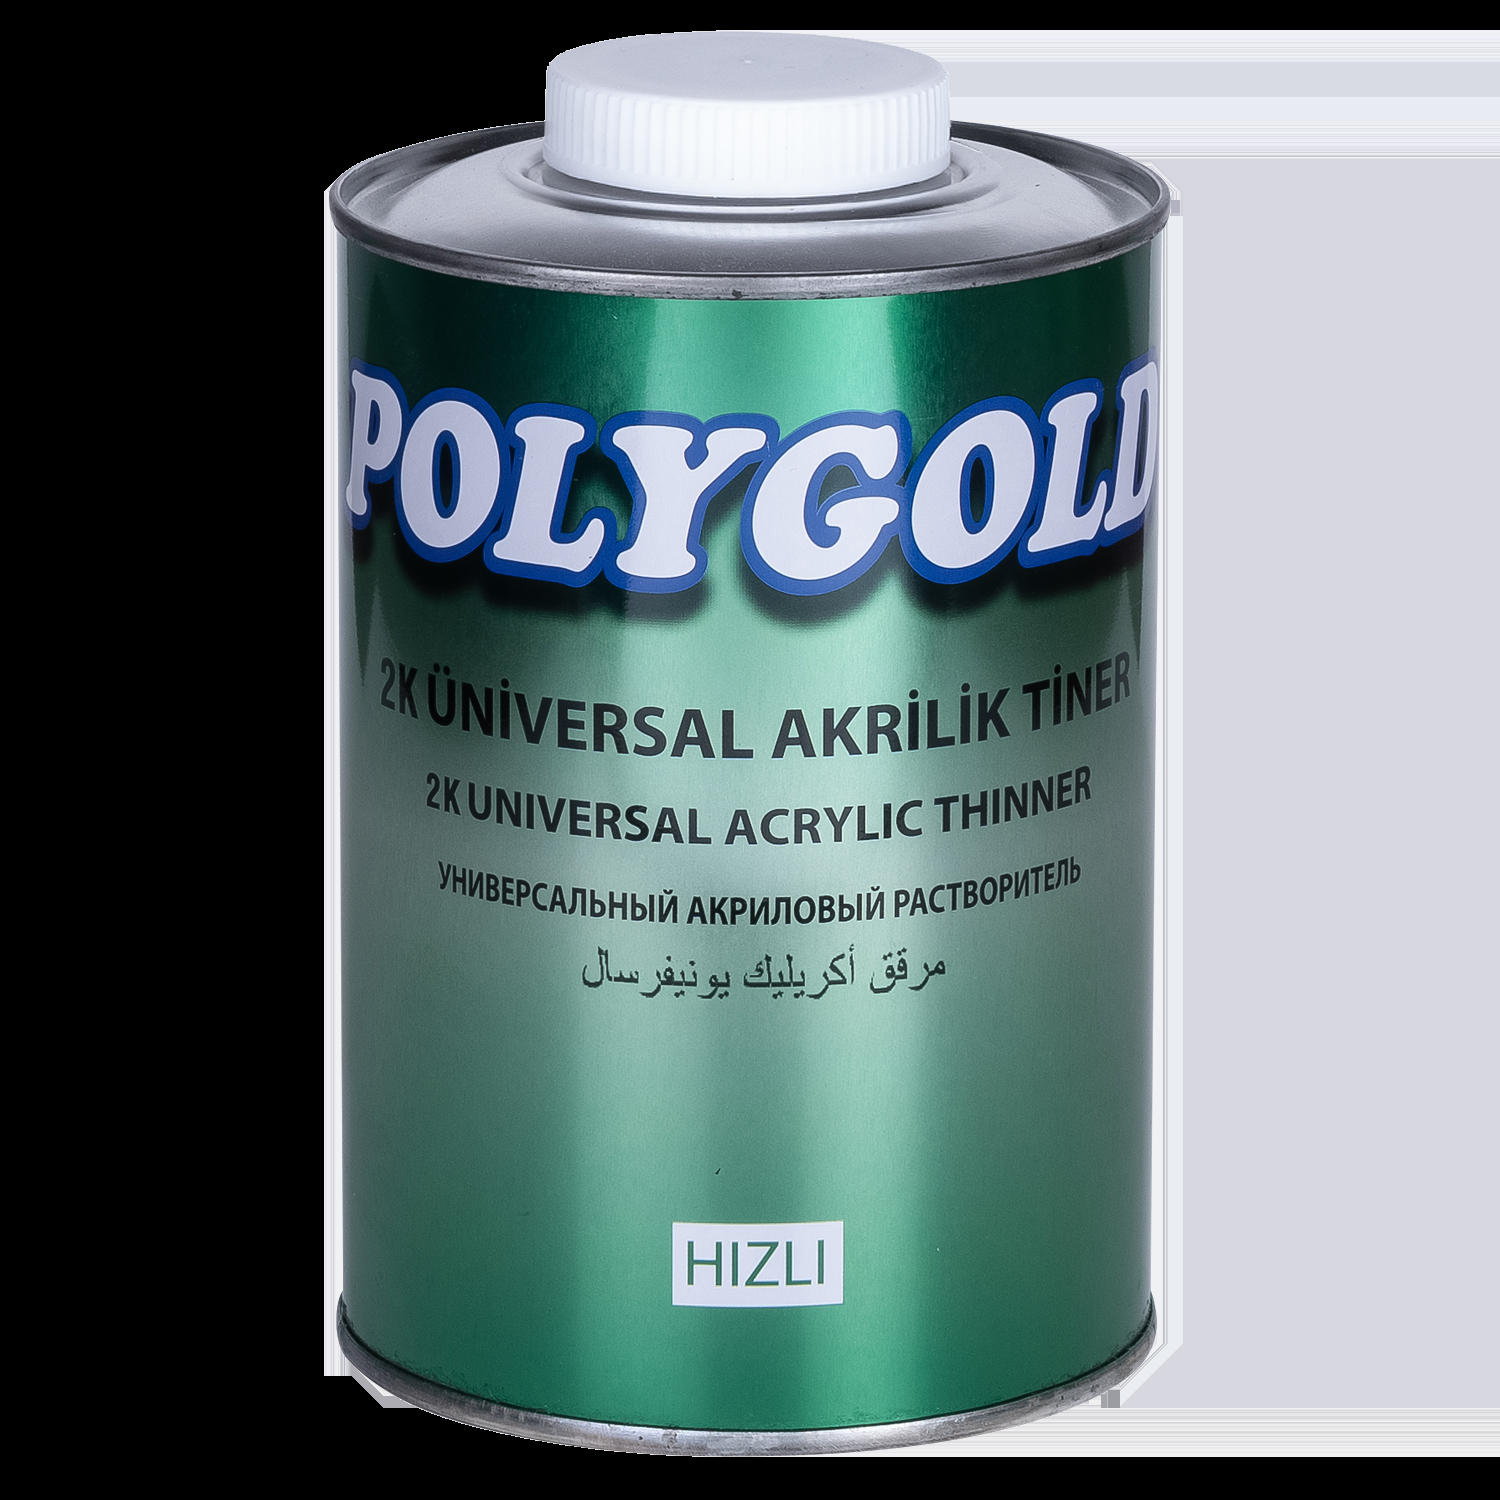 Polygold 2K Universal Akrilik Tiner